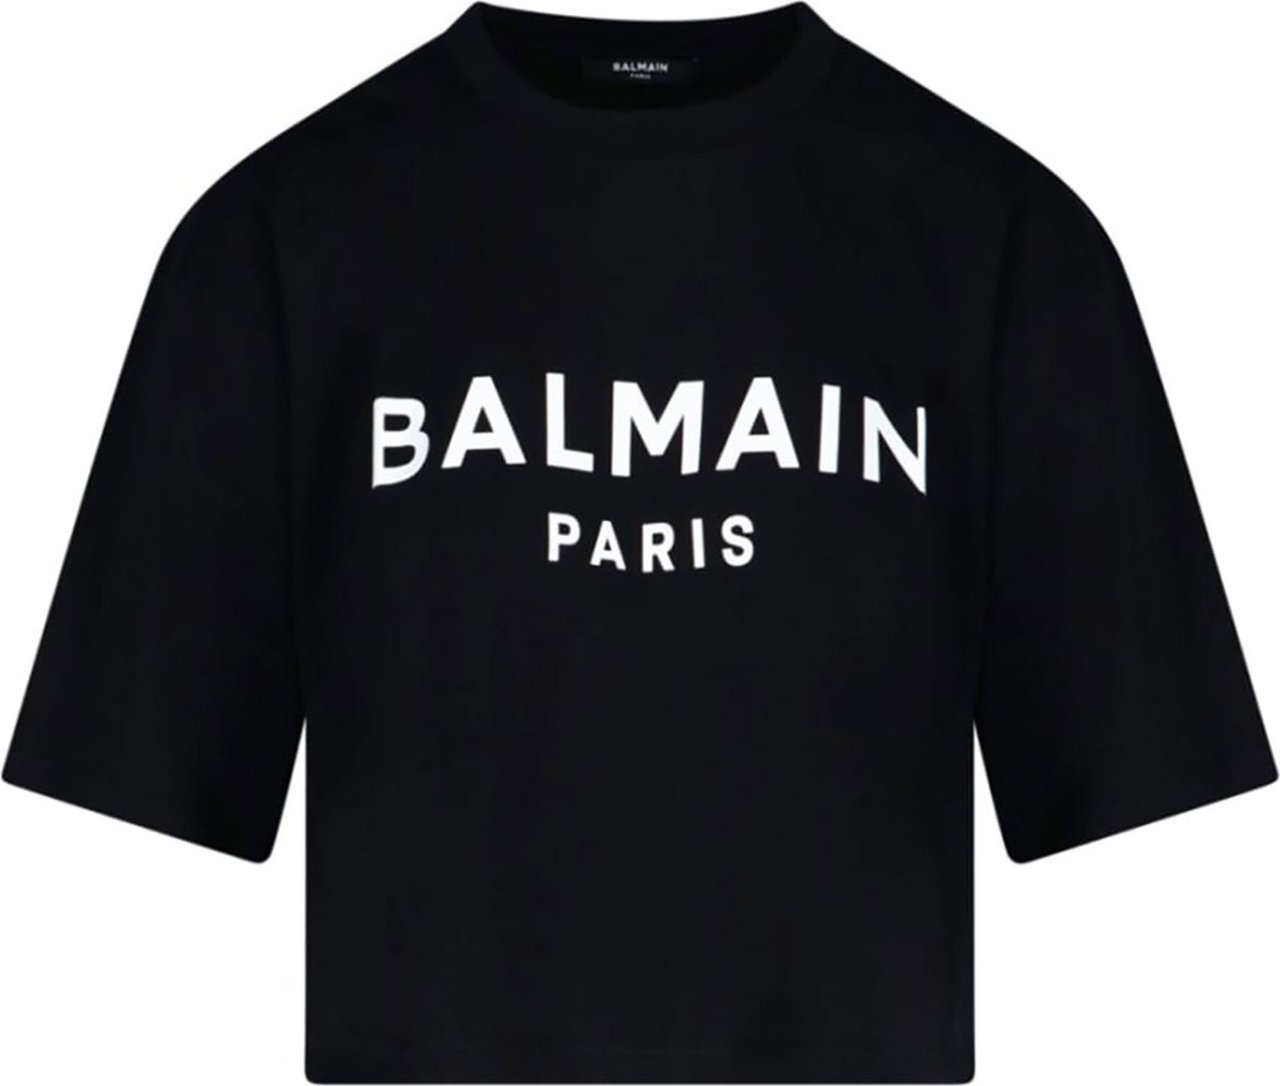 Balmain Cropped Print T-Shirt - Bulky Fit Divers